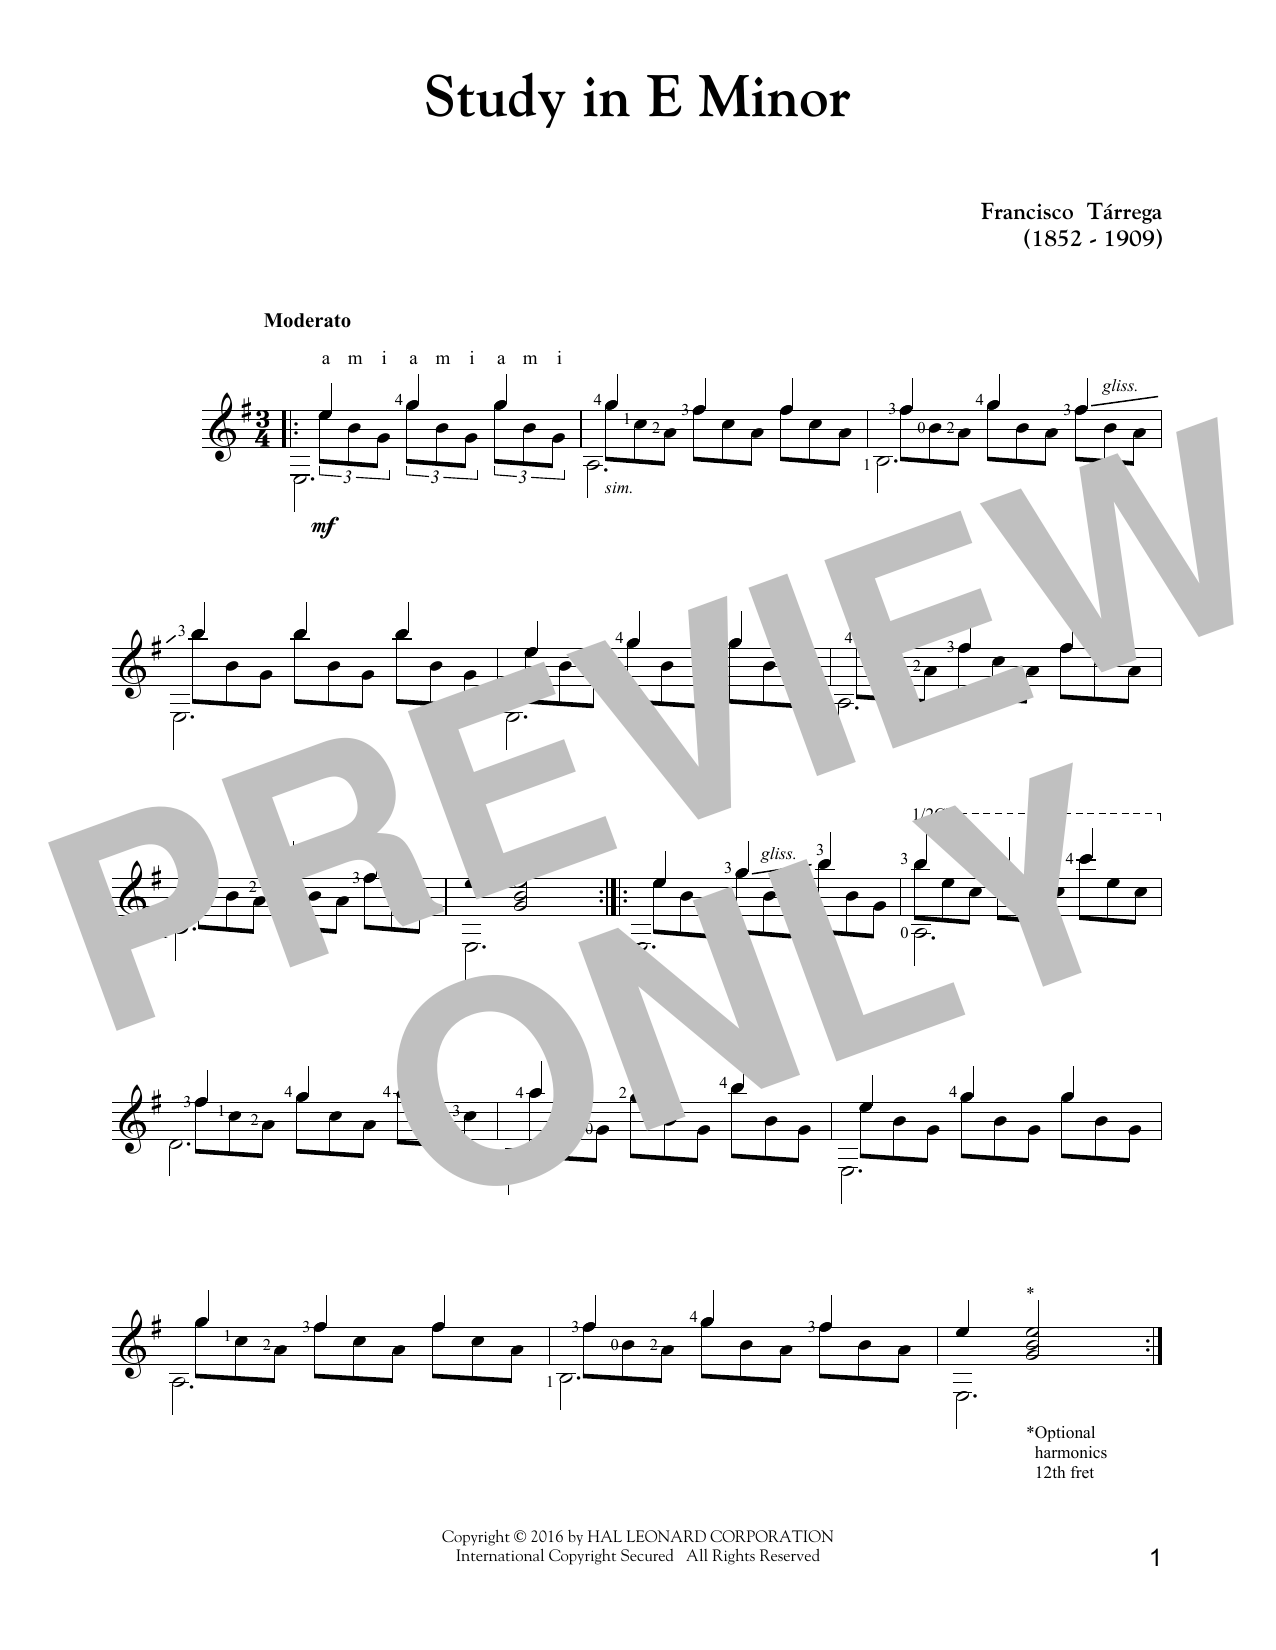 Francisco Tarrega Study In E Minor Sheet Music Notes & Chords for Solo Guitar - Download or Print PDF